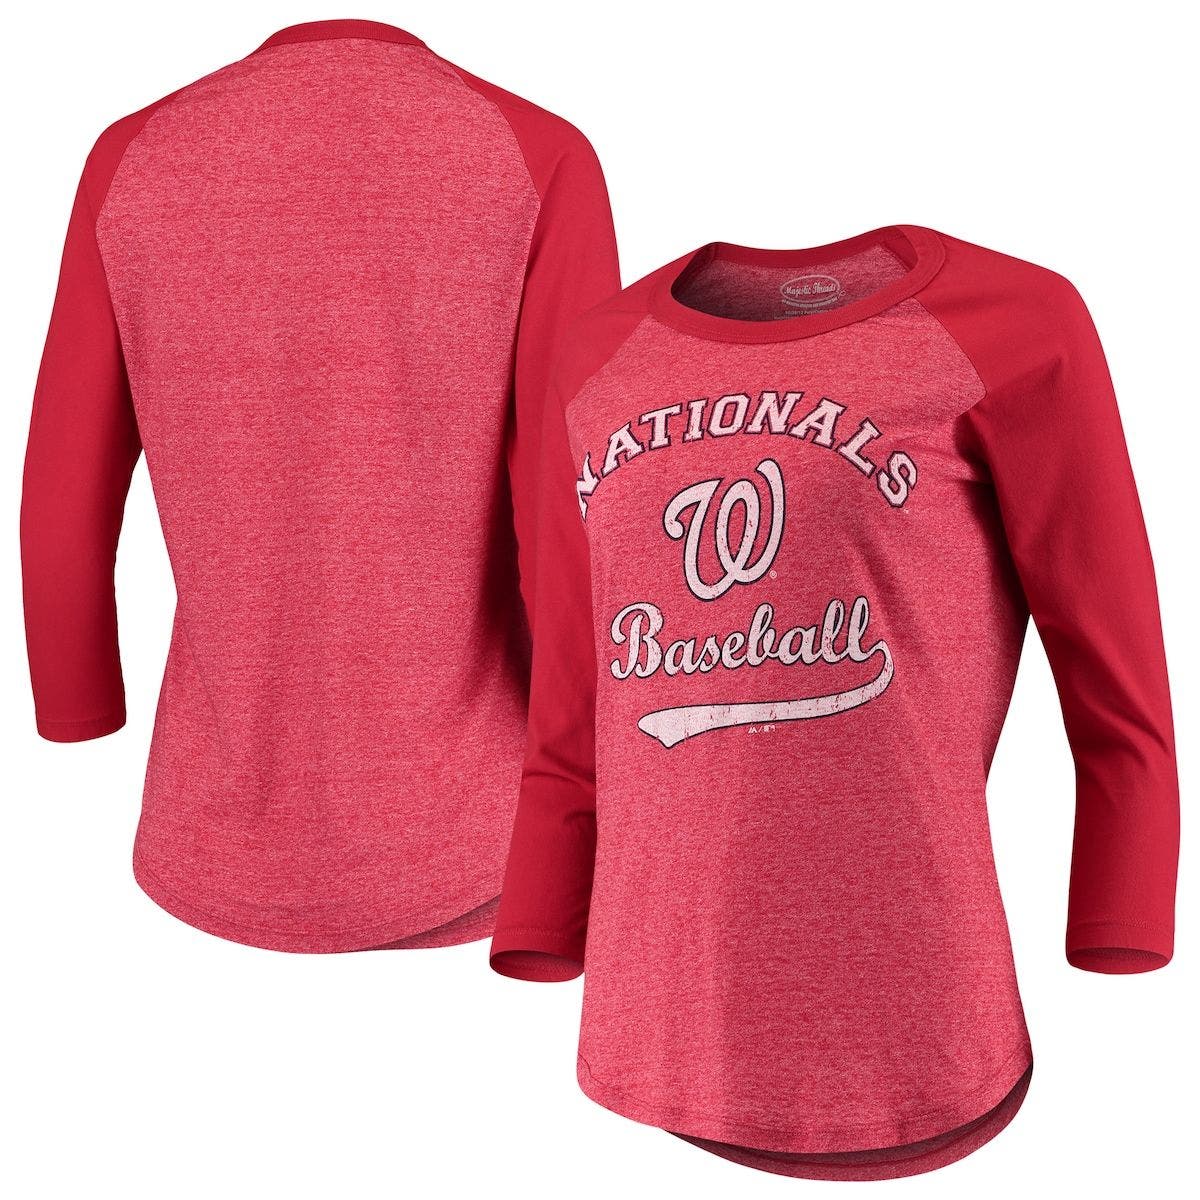 Washington Nationals Baseball Long Sleeve Shirt 